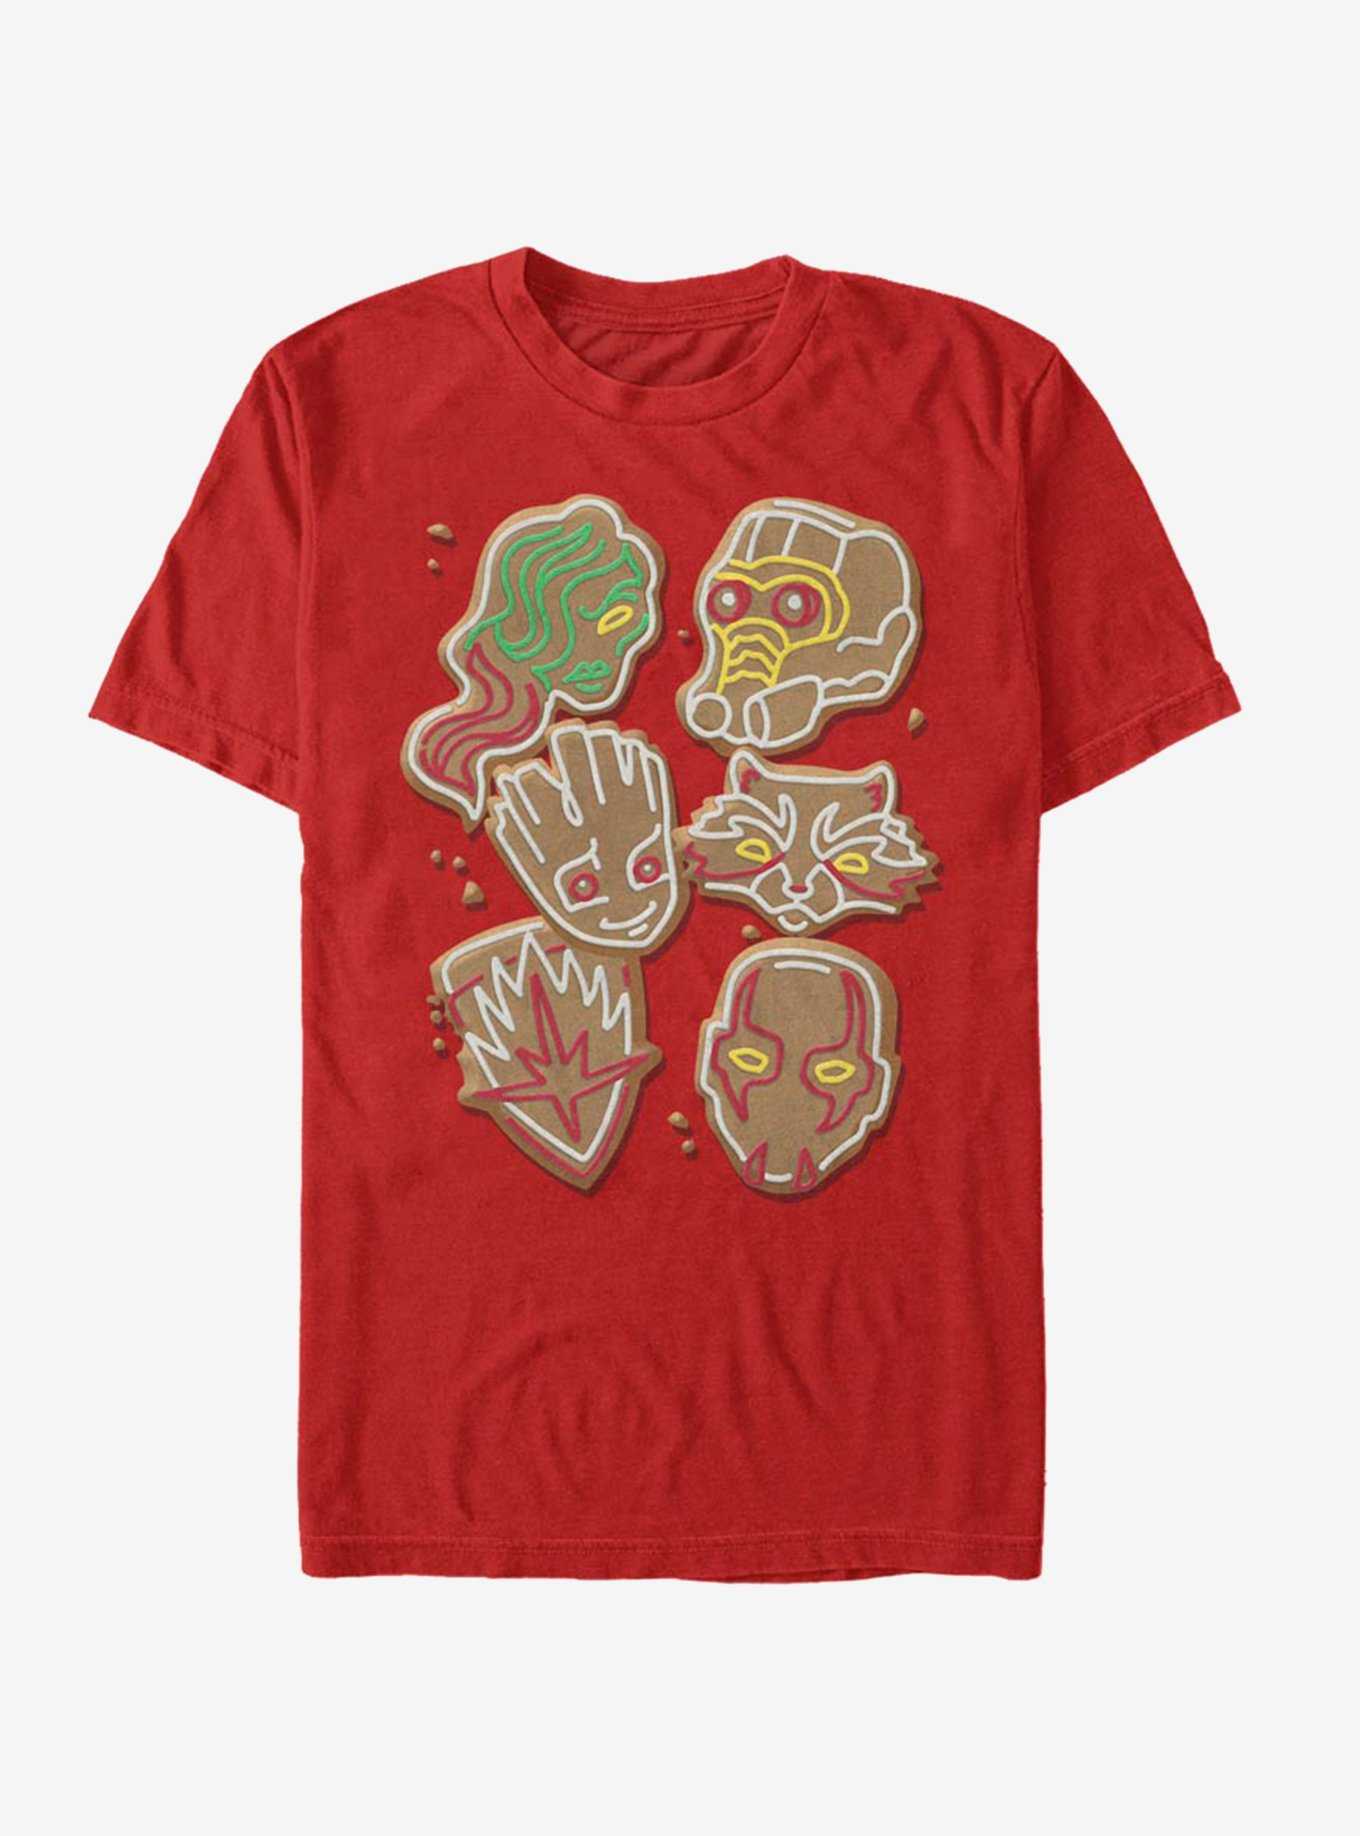 Marvel Guardians Of The Galaxy Guardian Cookies T-Shirt, , hi-res